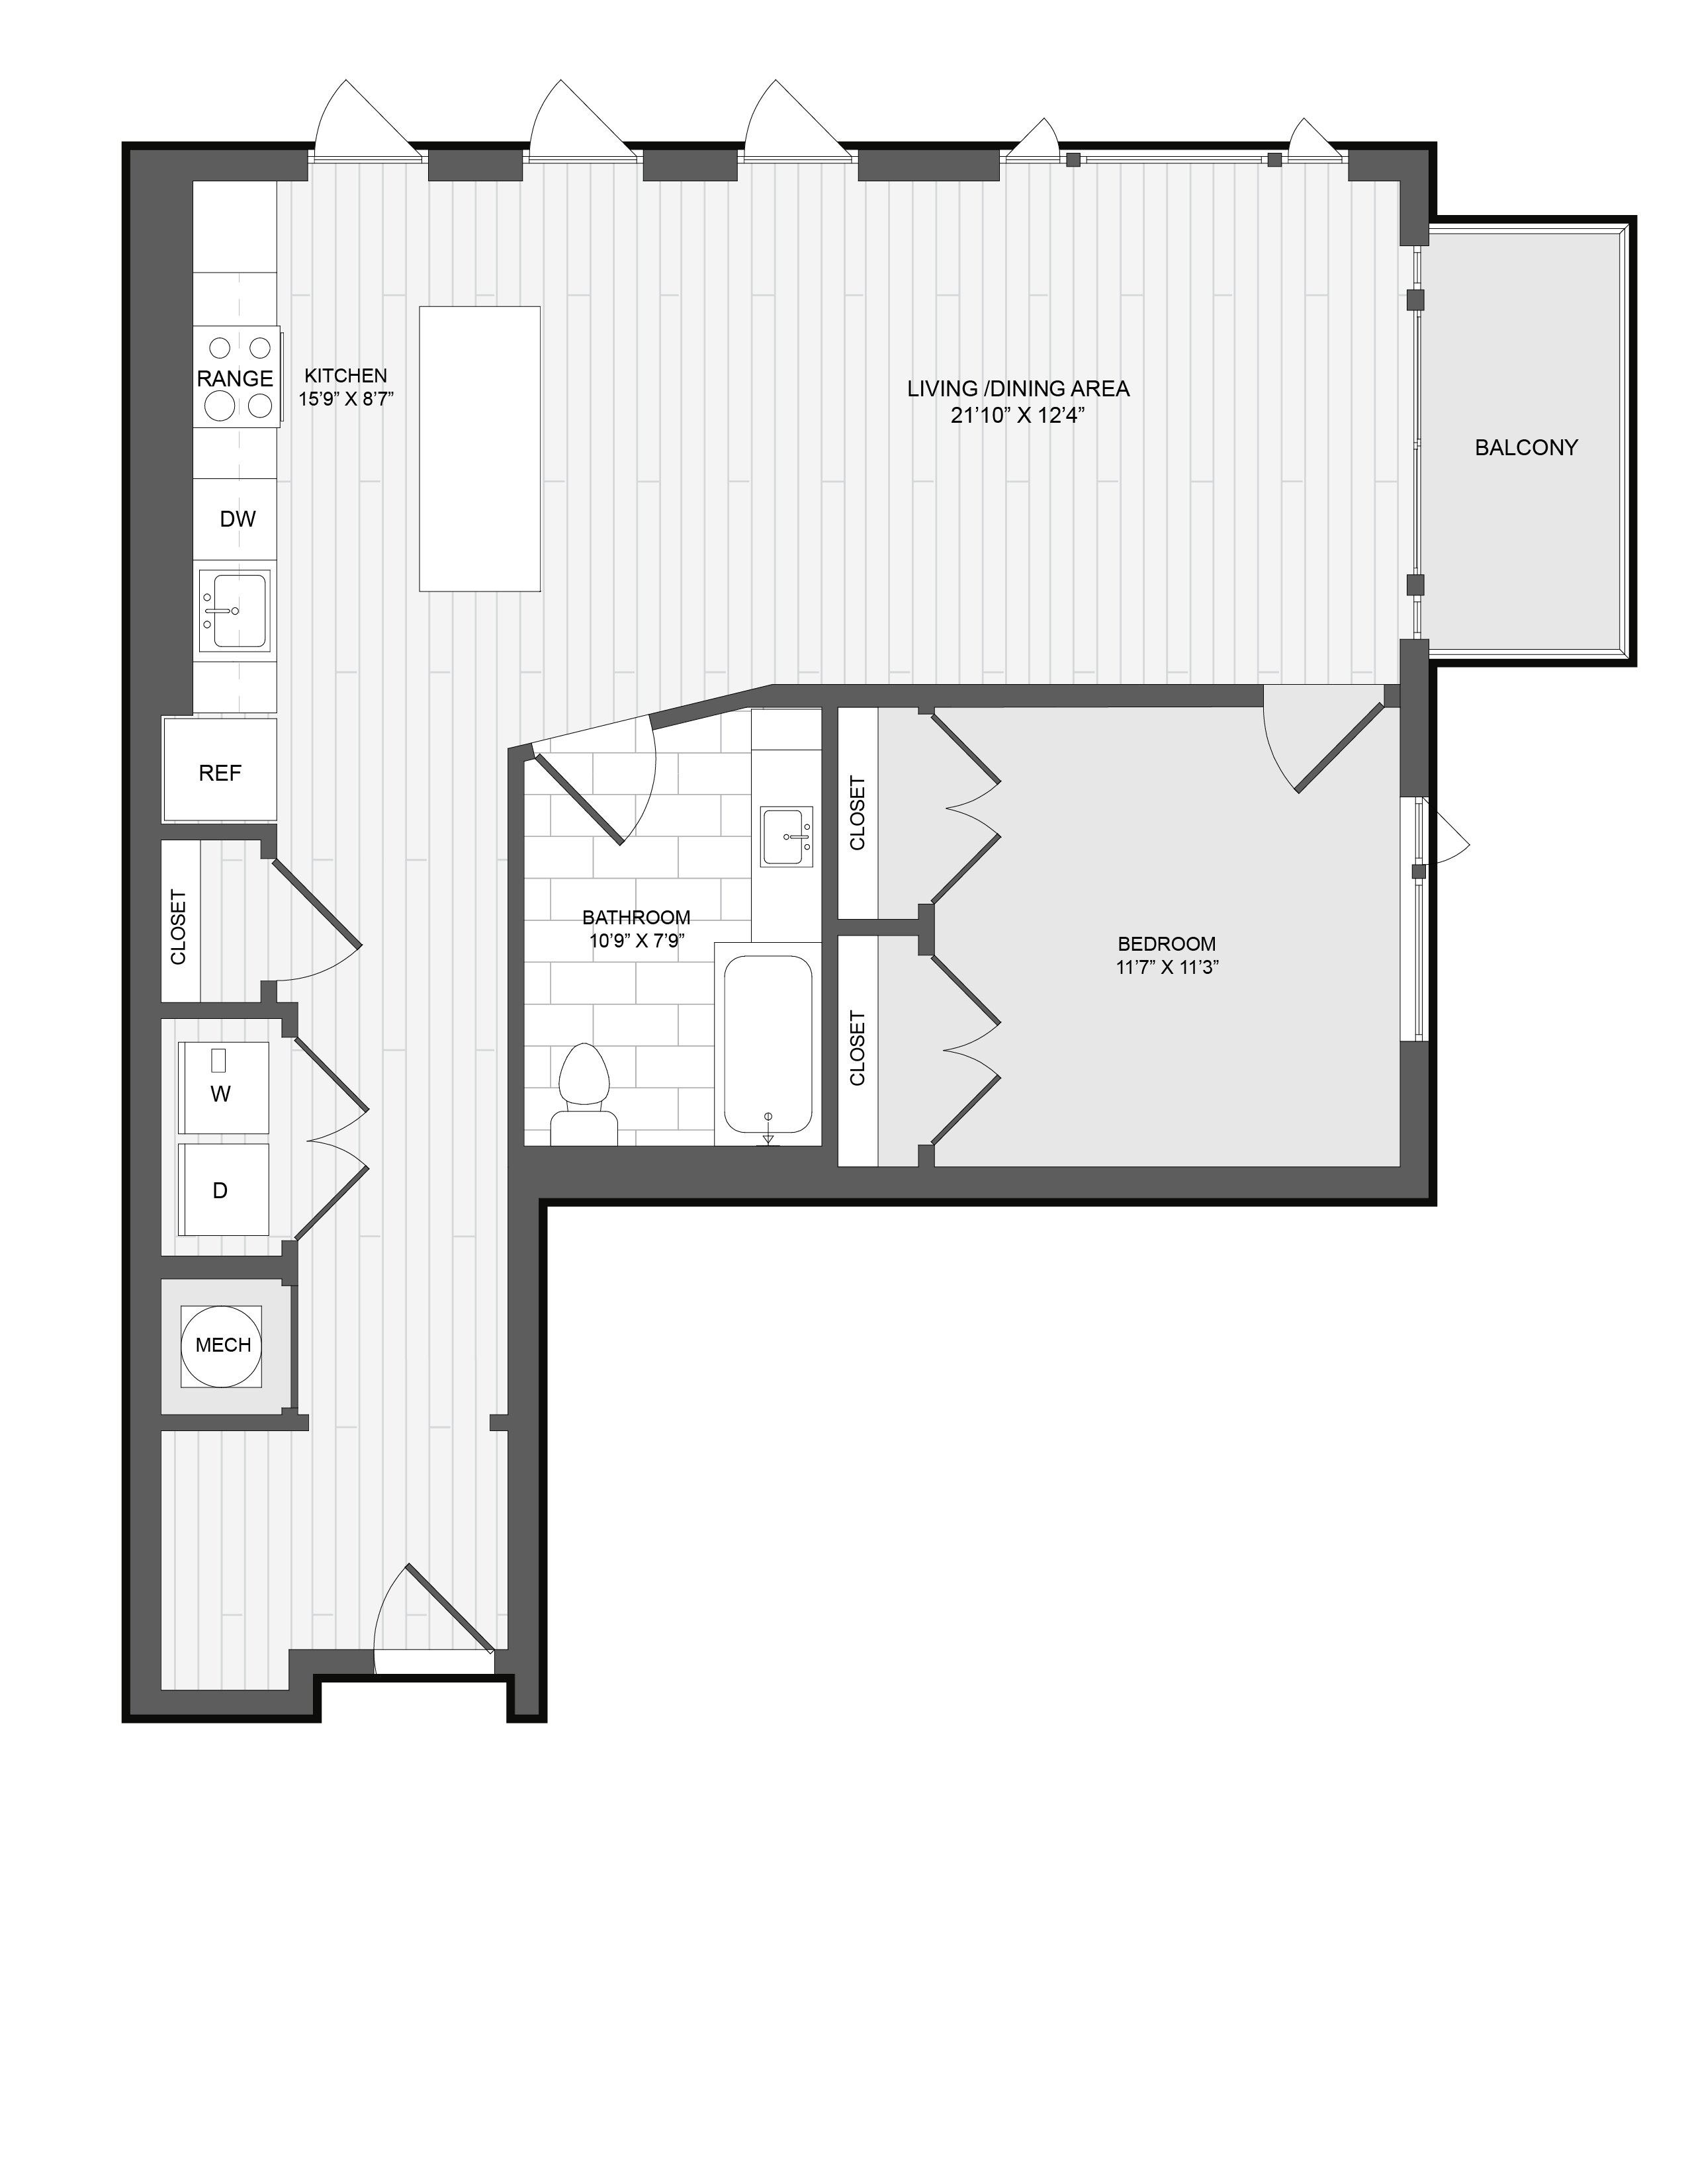 7 X 11 Bathroom And Closet Floor Plans Bathroom Flooring